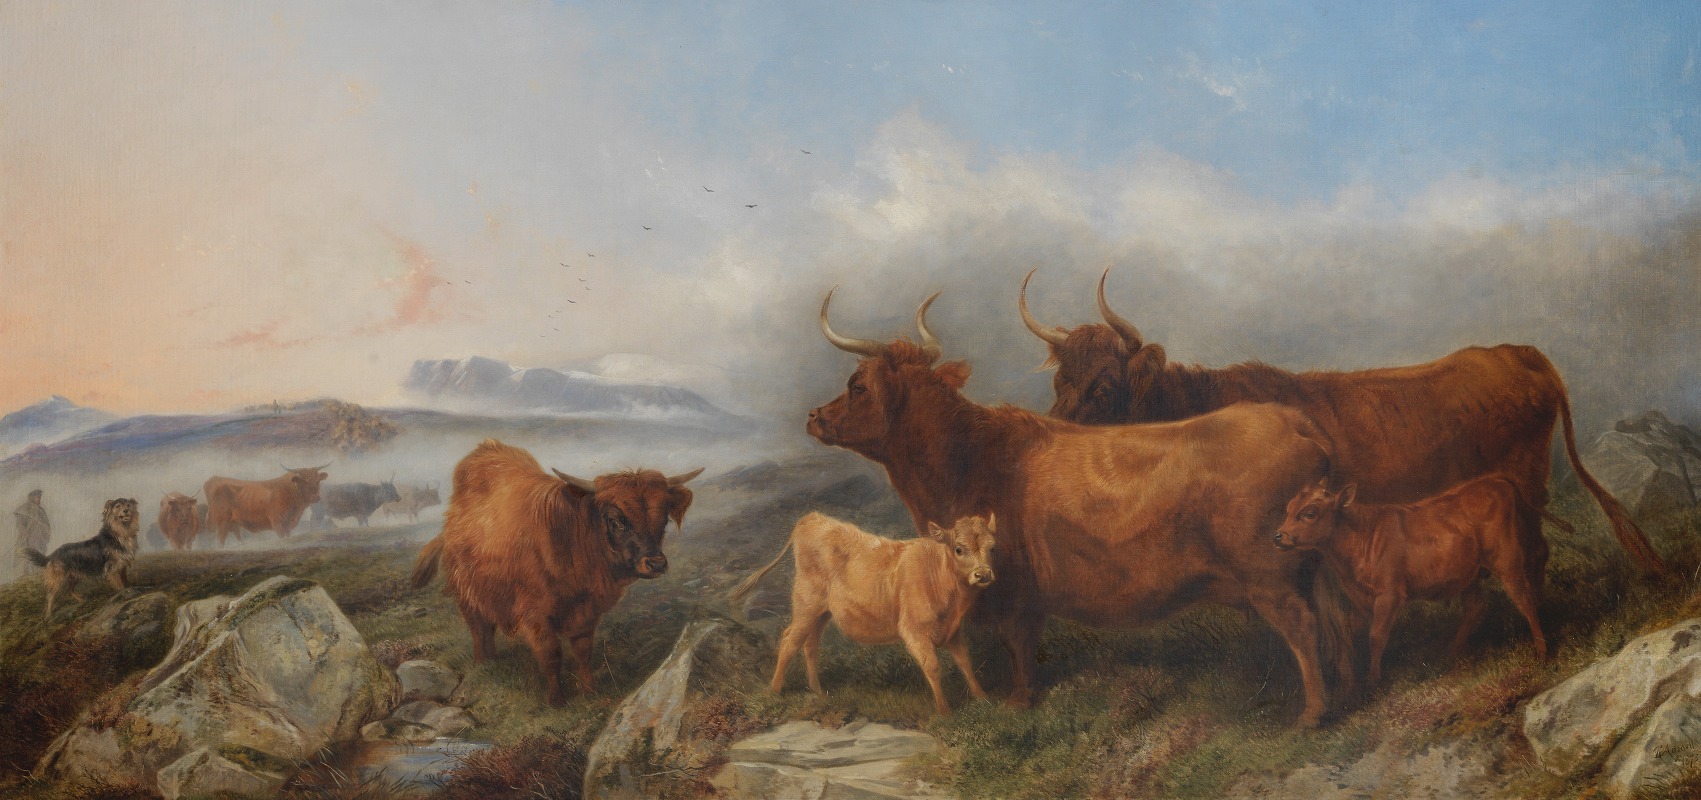 Richard Ansdell - Gathering the herd